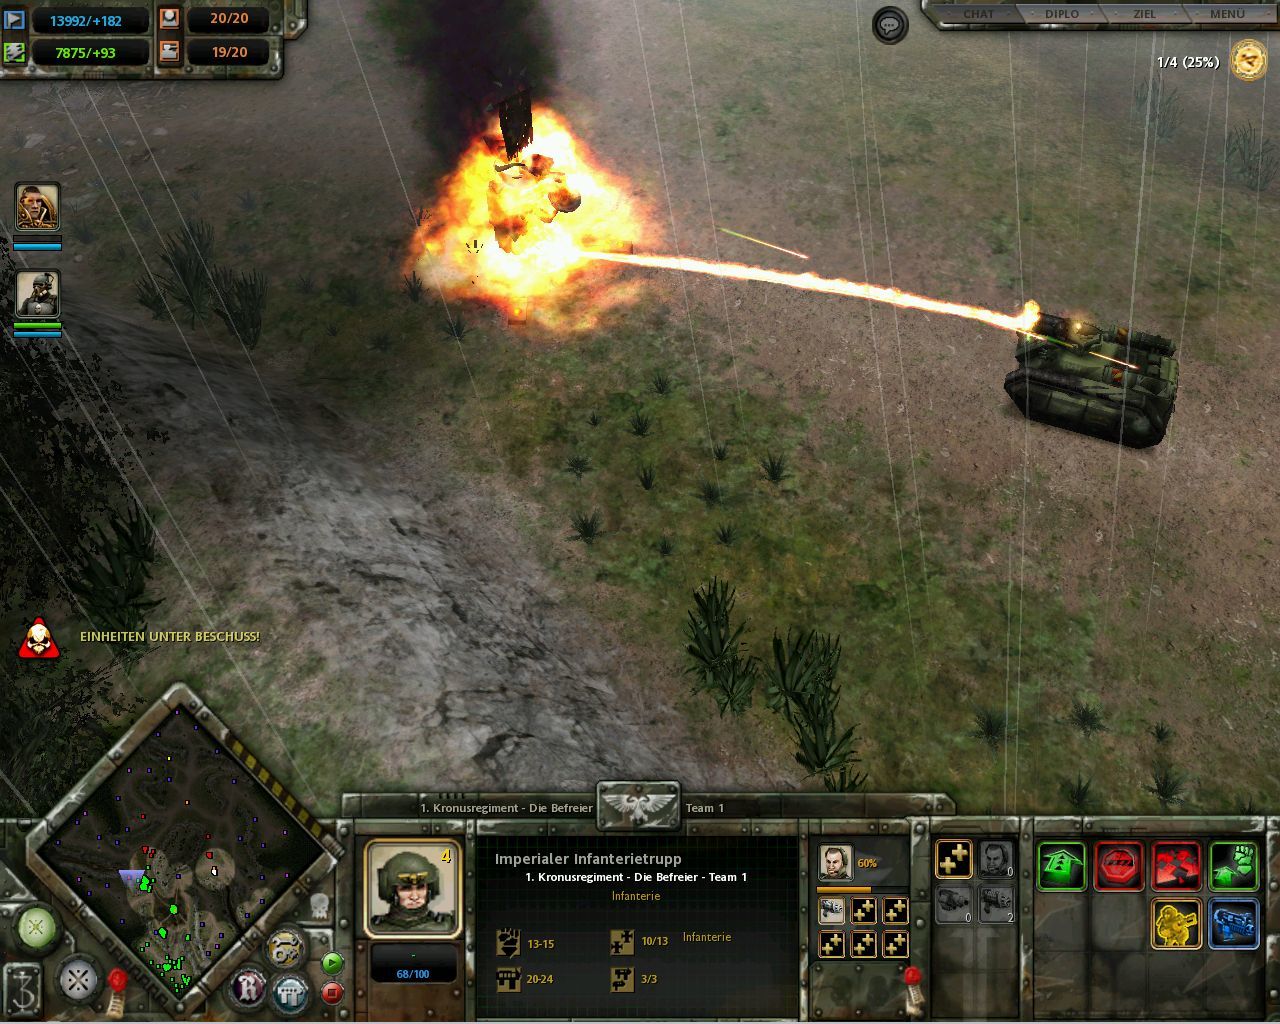 dawn of war dark crusade free download full version pc game